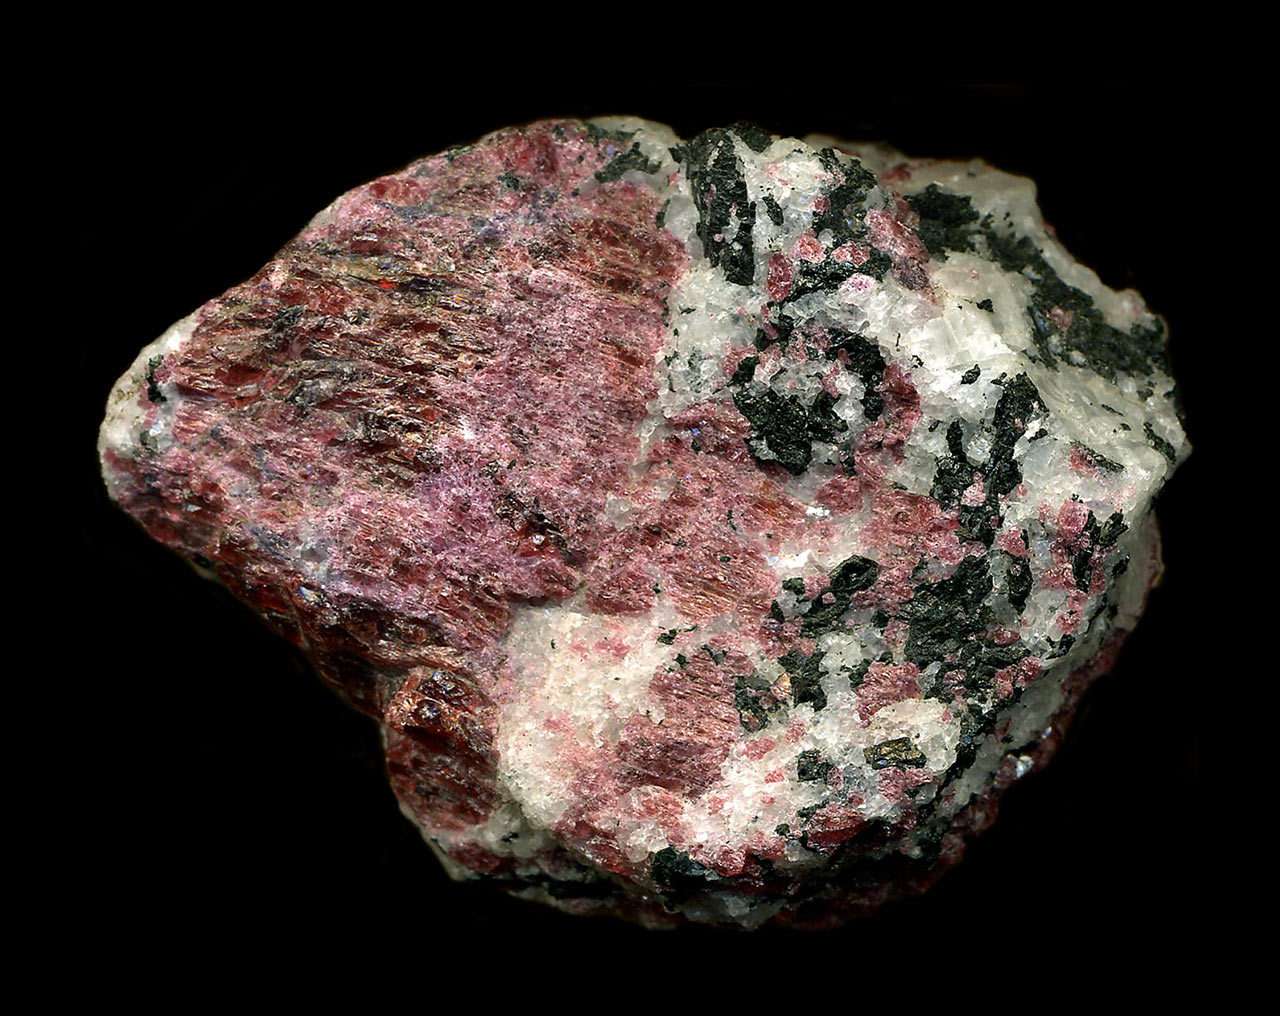 Red eudyalite with black arfvedsonite amphibole from Kipawa River, Villedieu Township, Quebec, Canada